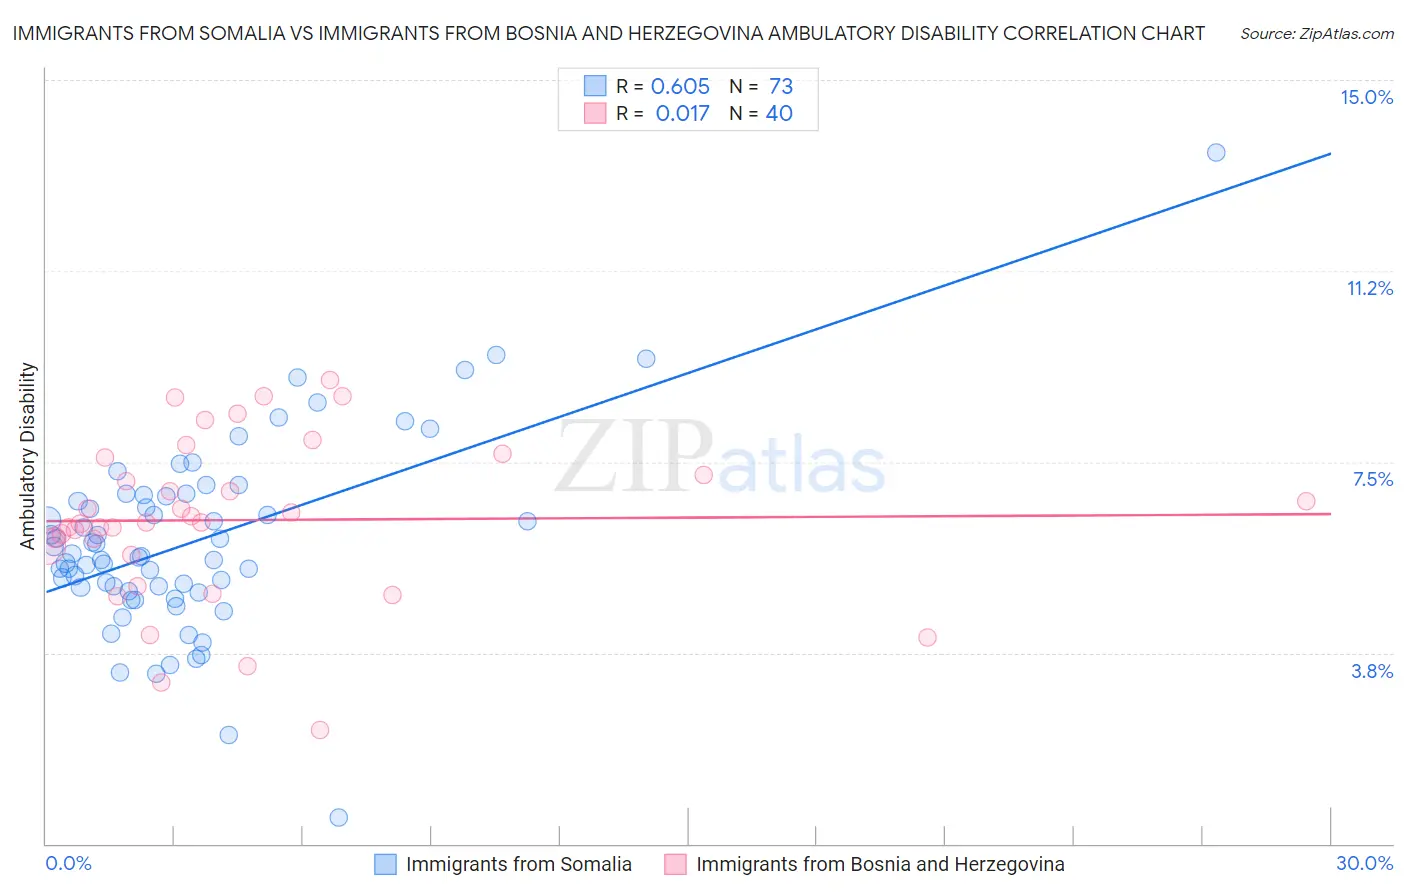 Immigrants from Somalia vs Immigrants from Bosnia and Herzegovina Ambulatory Disability